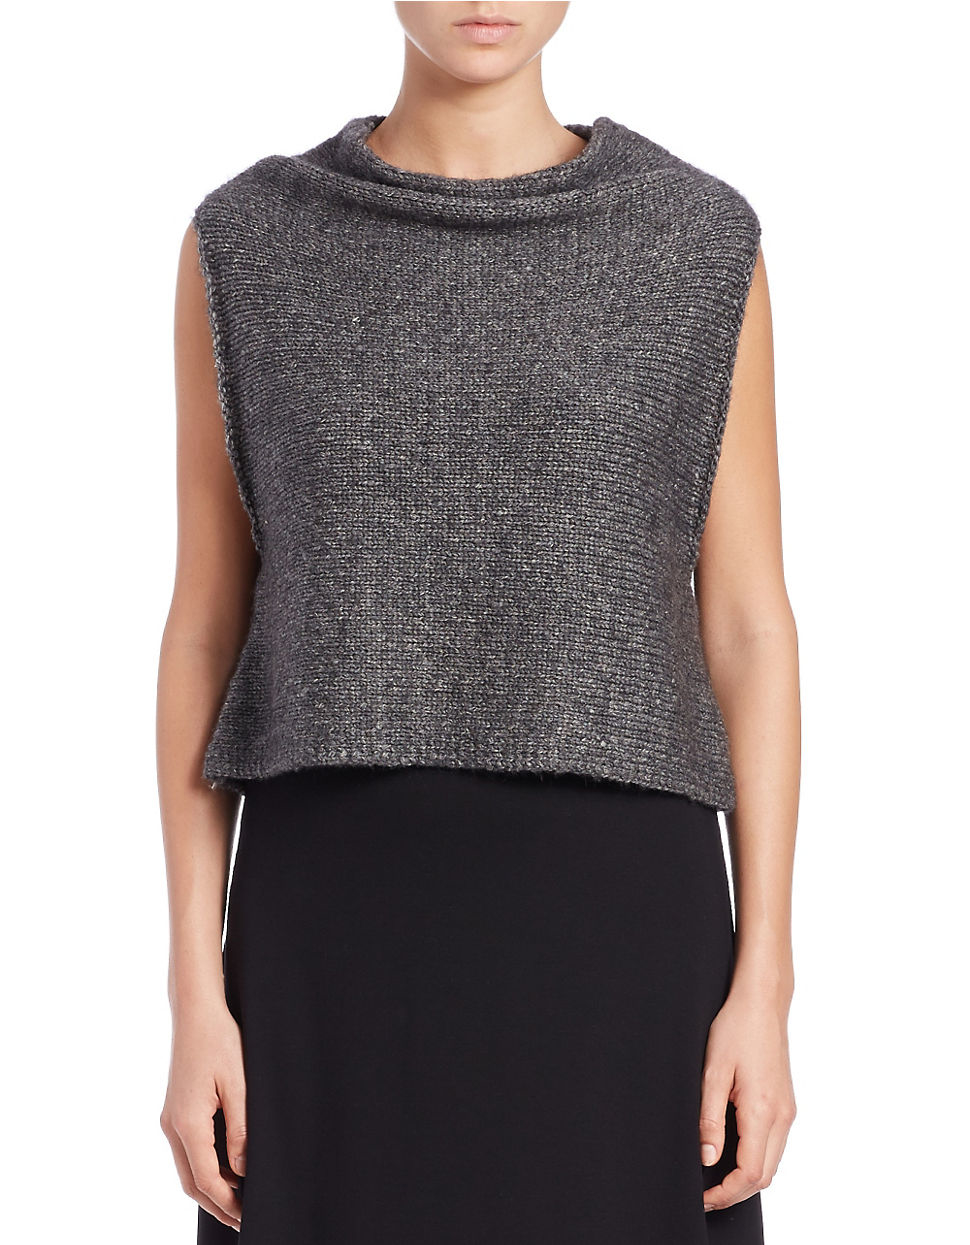 Lyst - Eileen fisher Wool, Alpaca And Silk Funnelneck Sweater in Gray